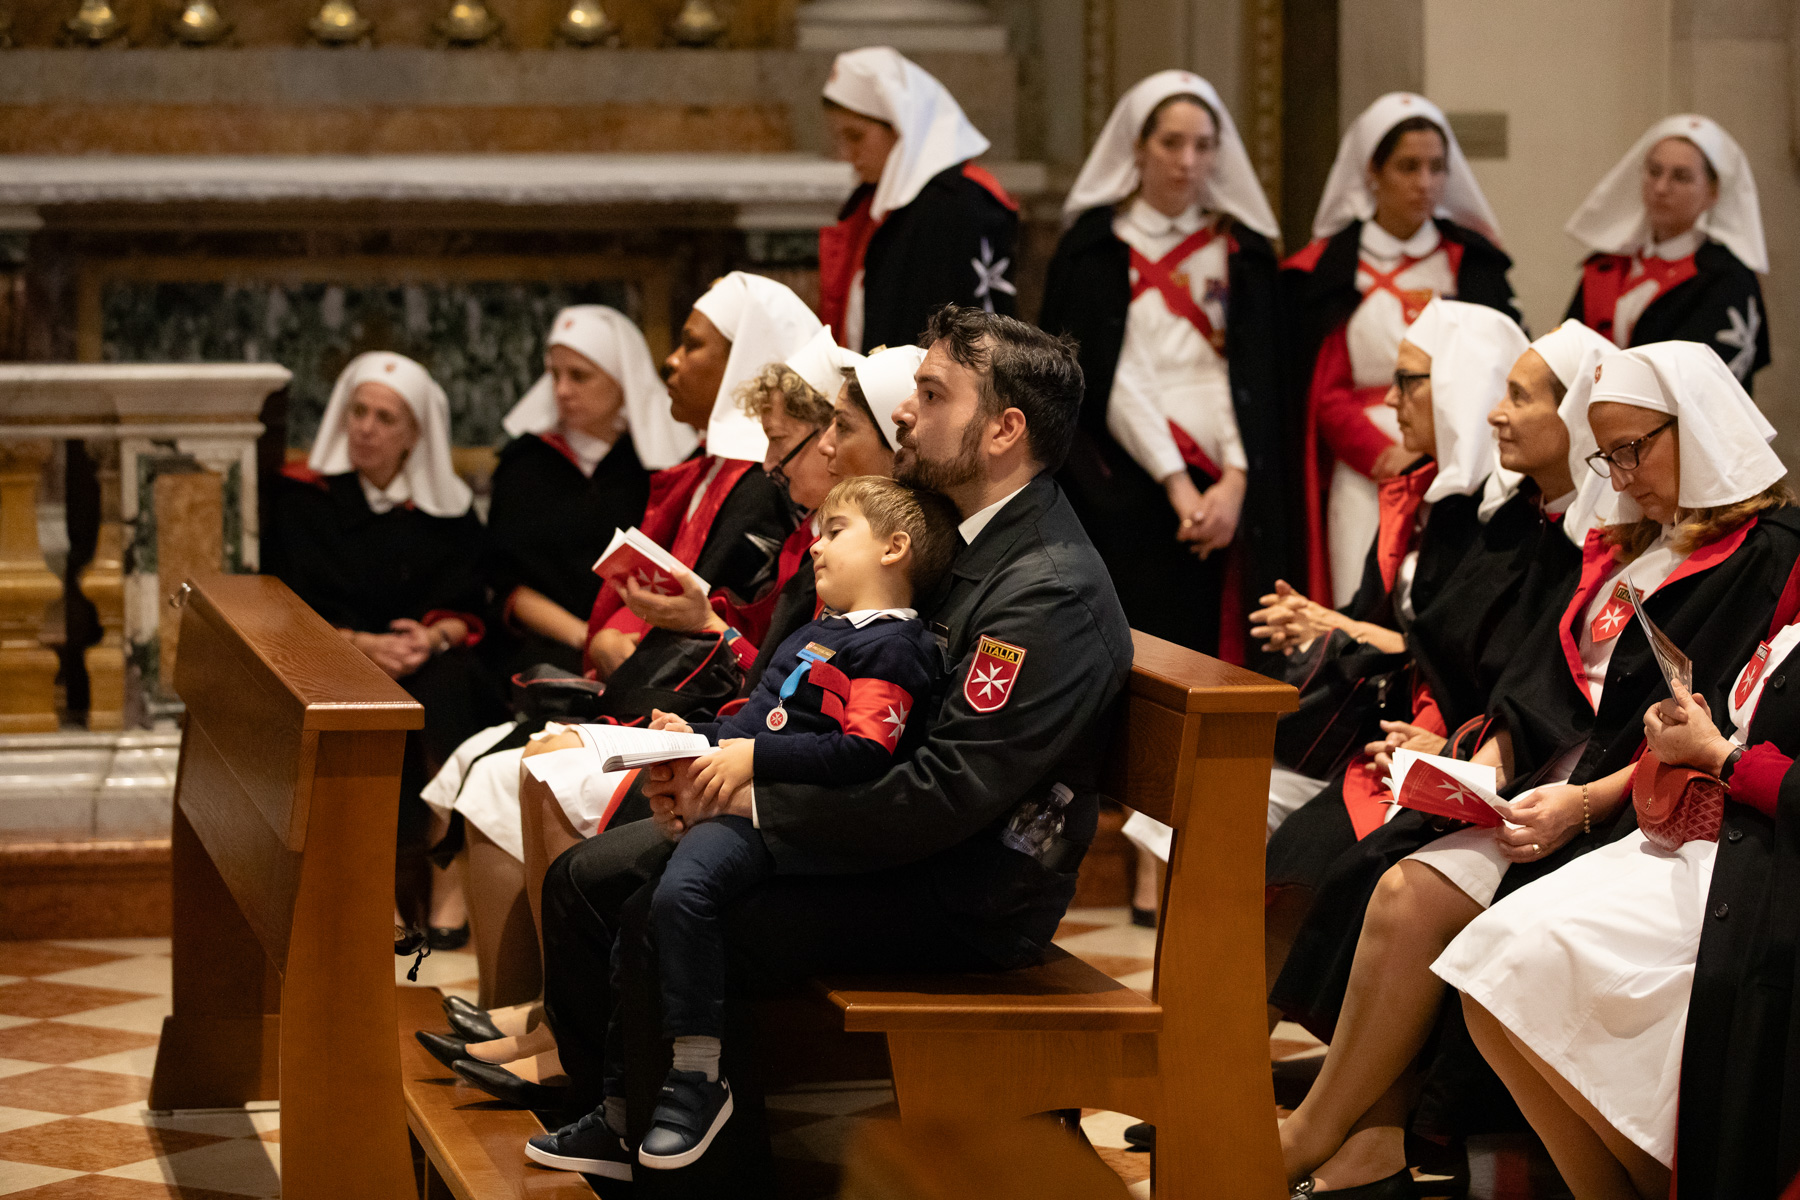 The traditional Loreto pilgrimage of the Order of Malta’s three Italian Grand Priories